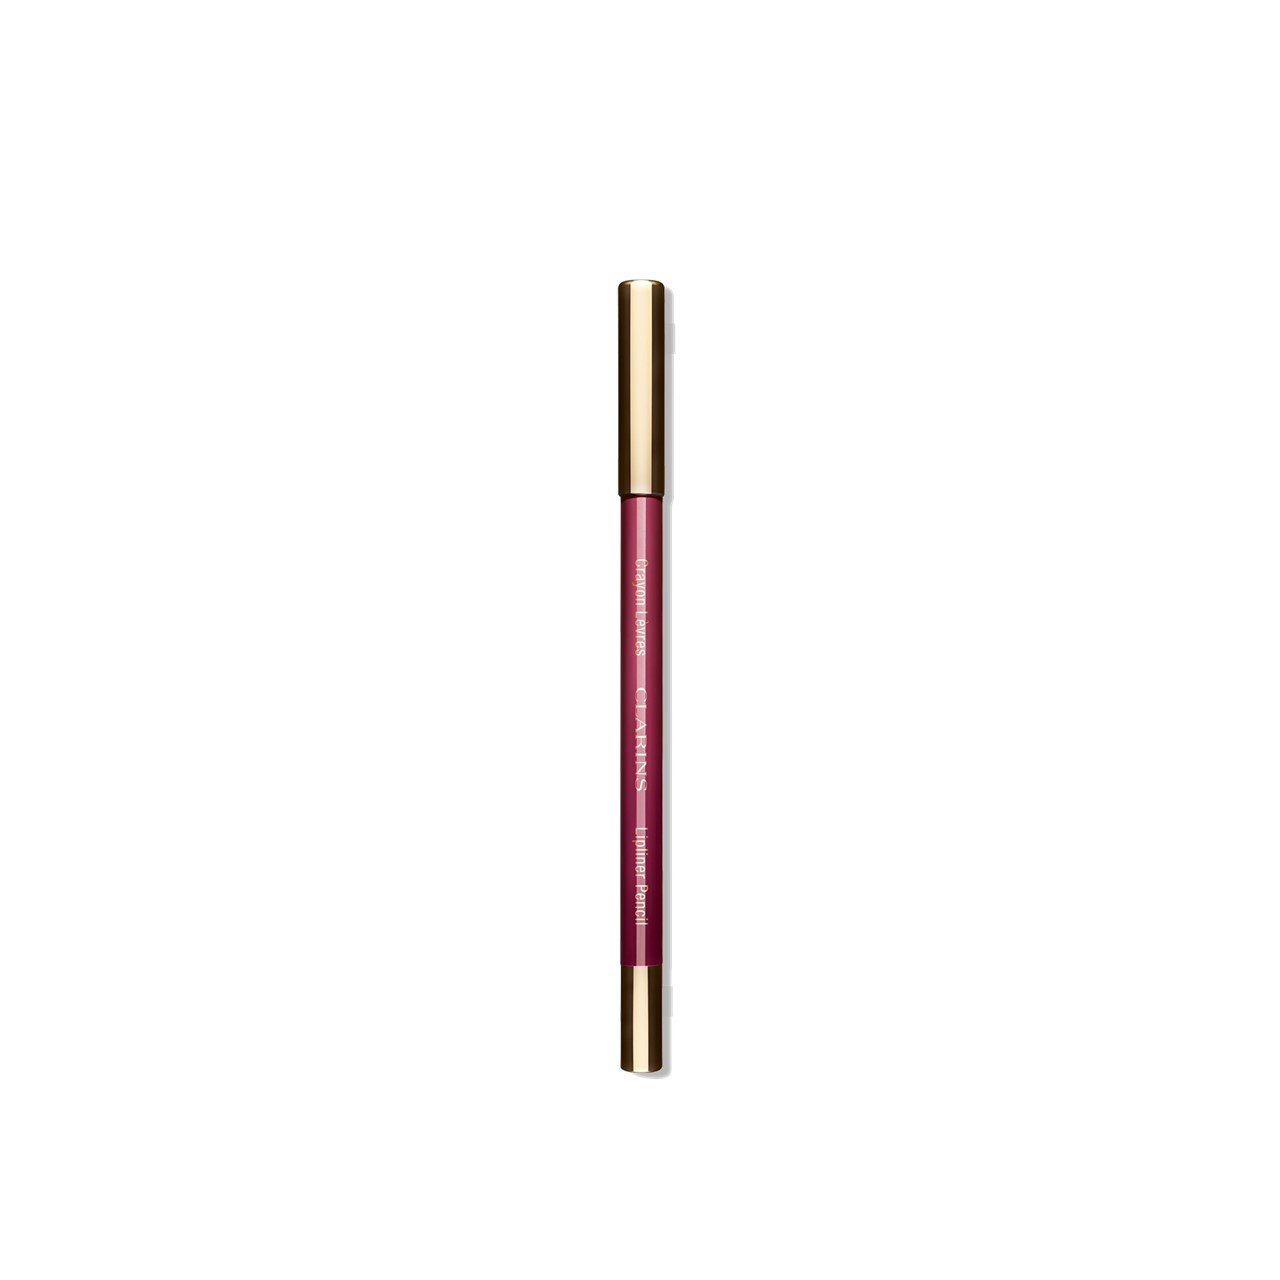 Clarins Lipliner Pencil 07 Plum 1.2g (0.04oz)